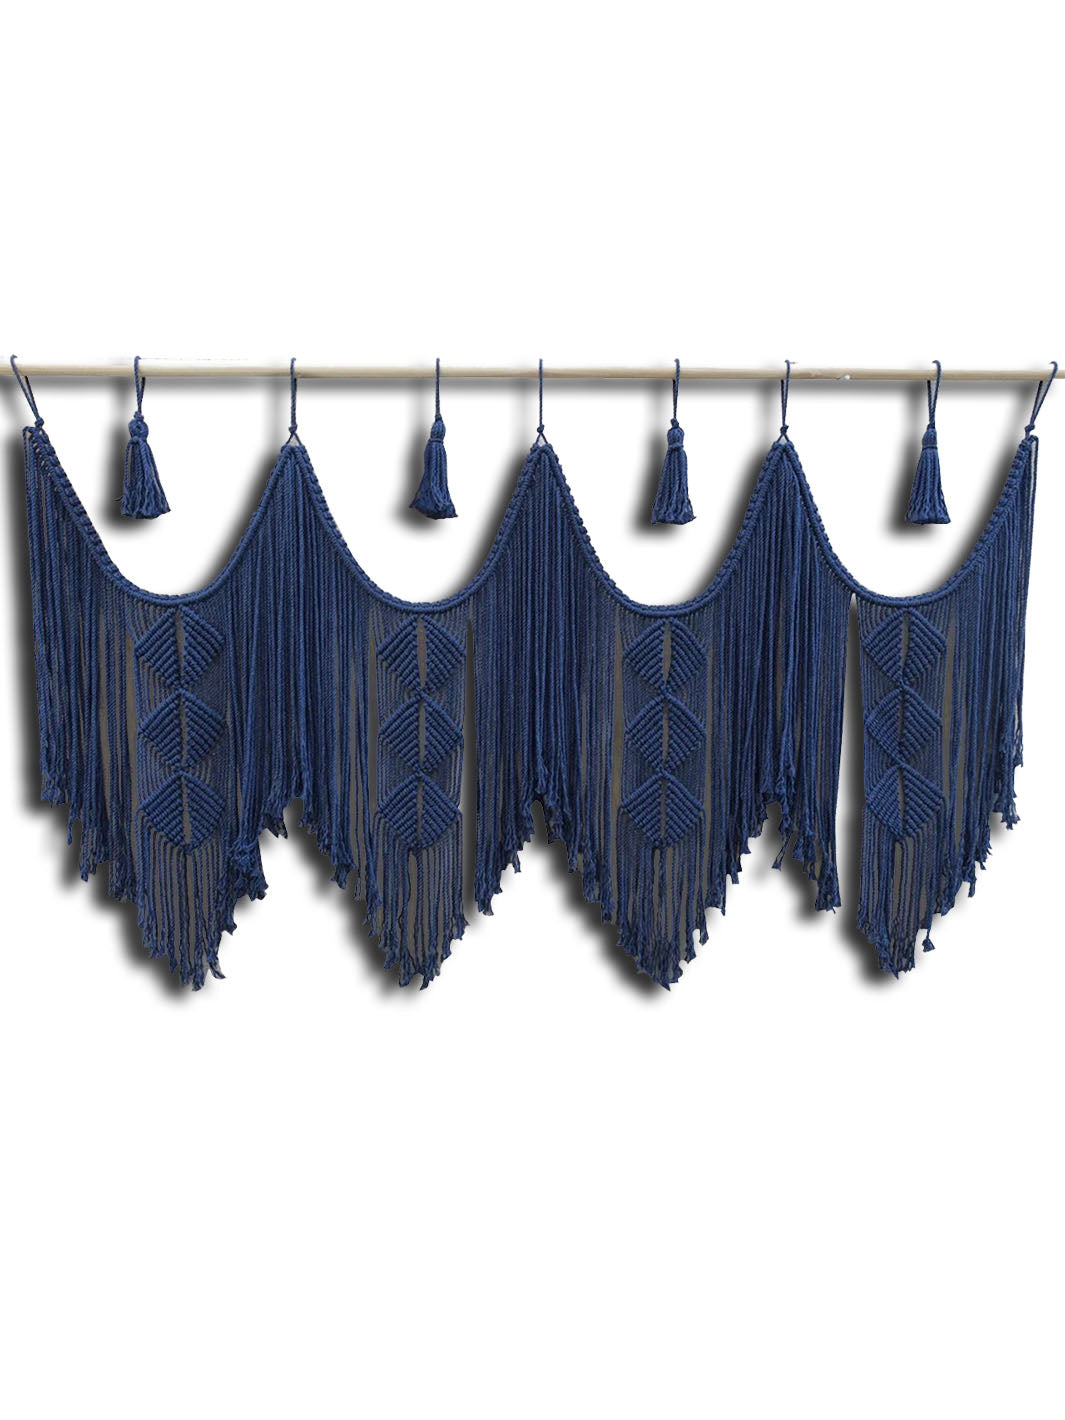 Handcrafted Navy Blue Macrame Boho Wall Hanging Headboard Decoration WallKnot Curtains & Drapes WKN0144